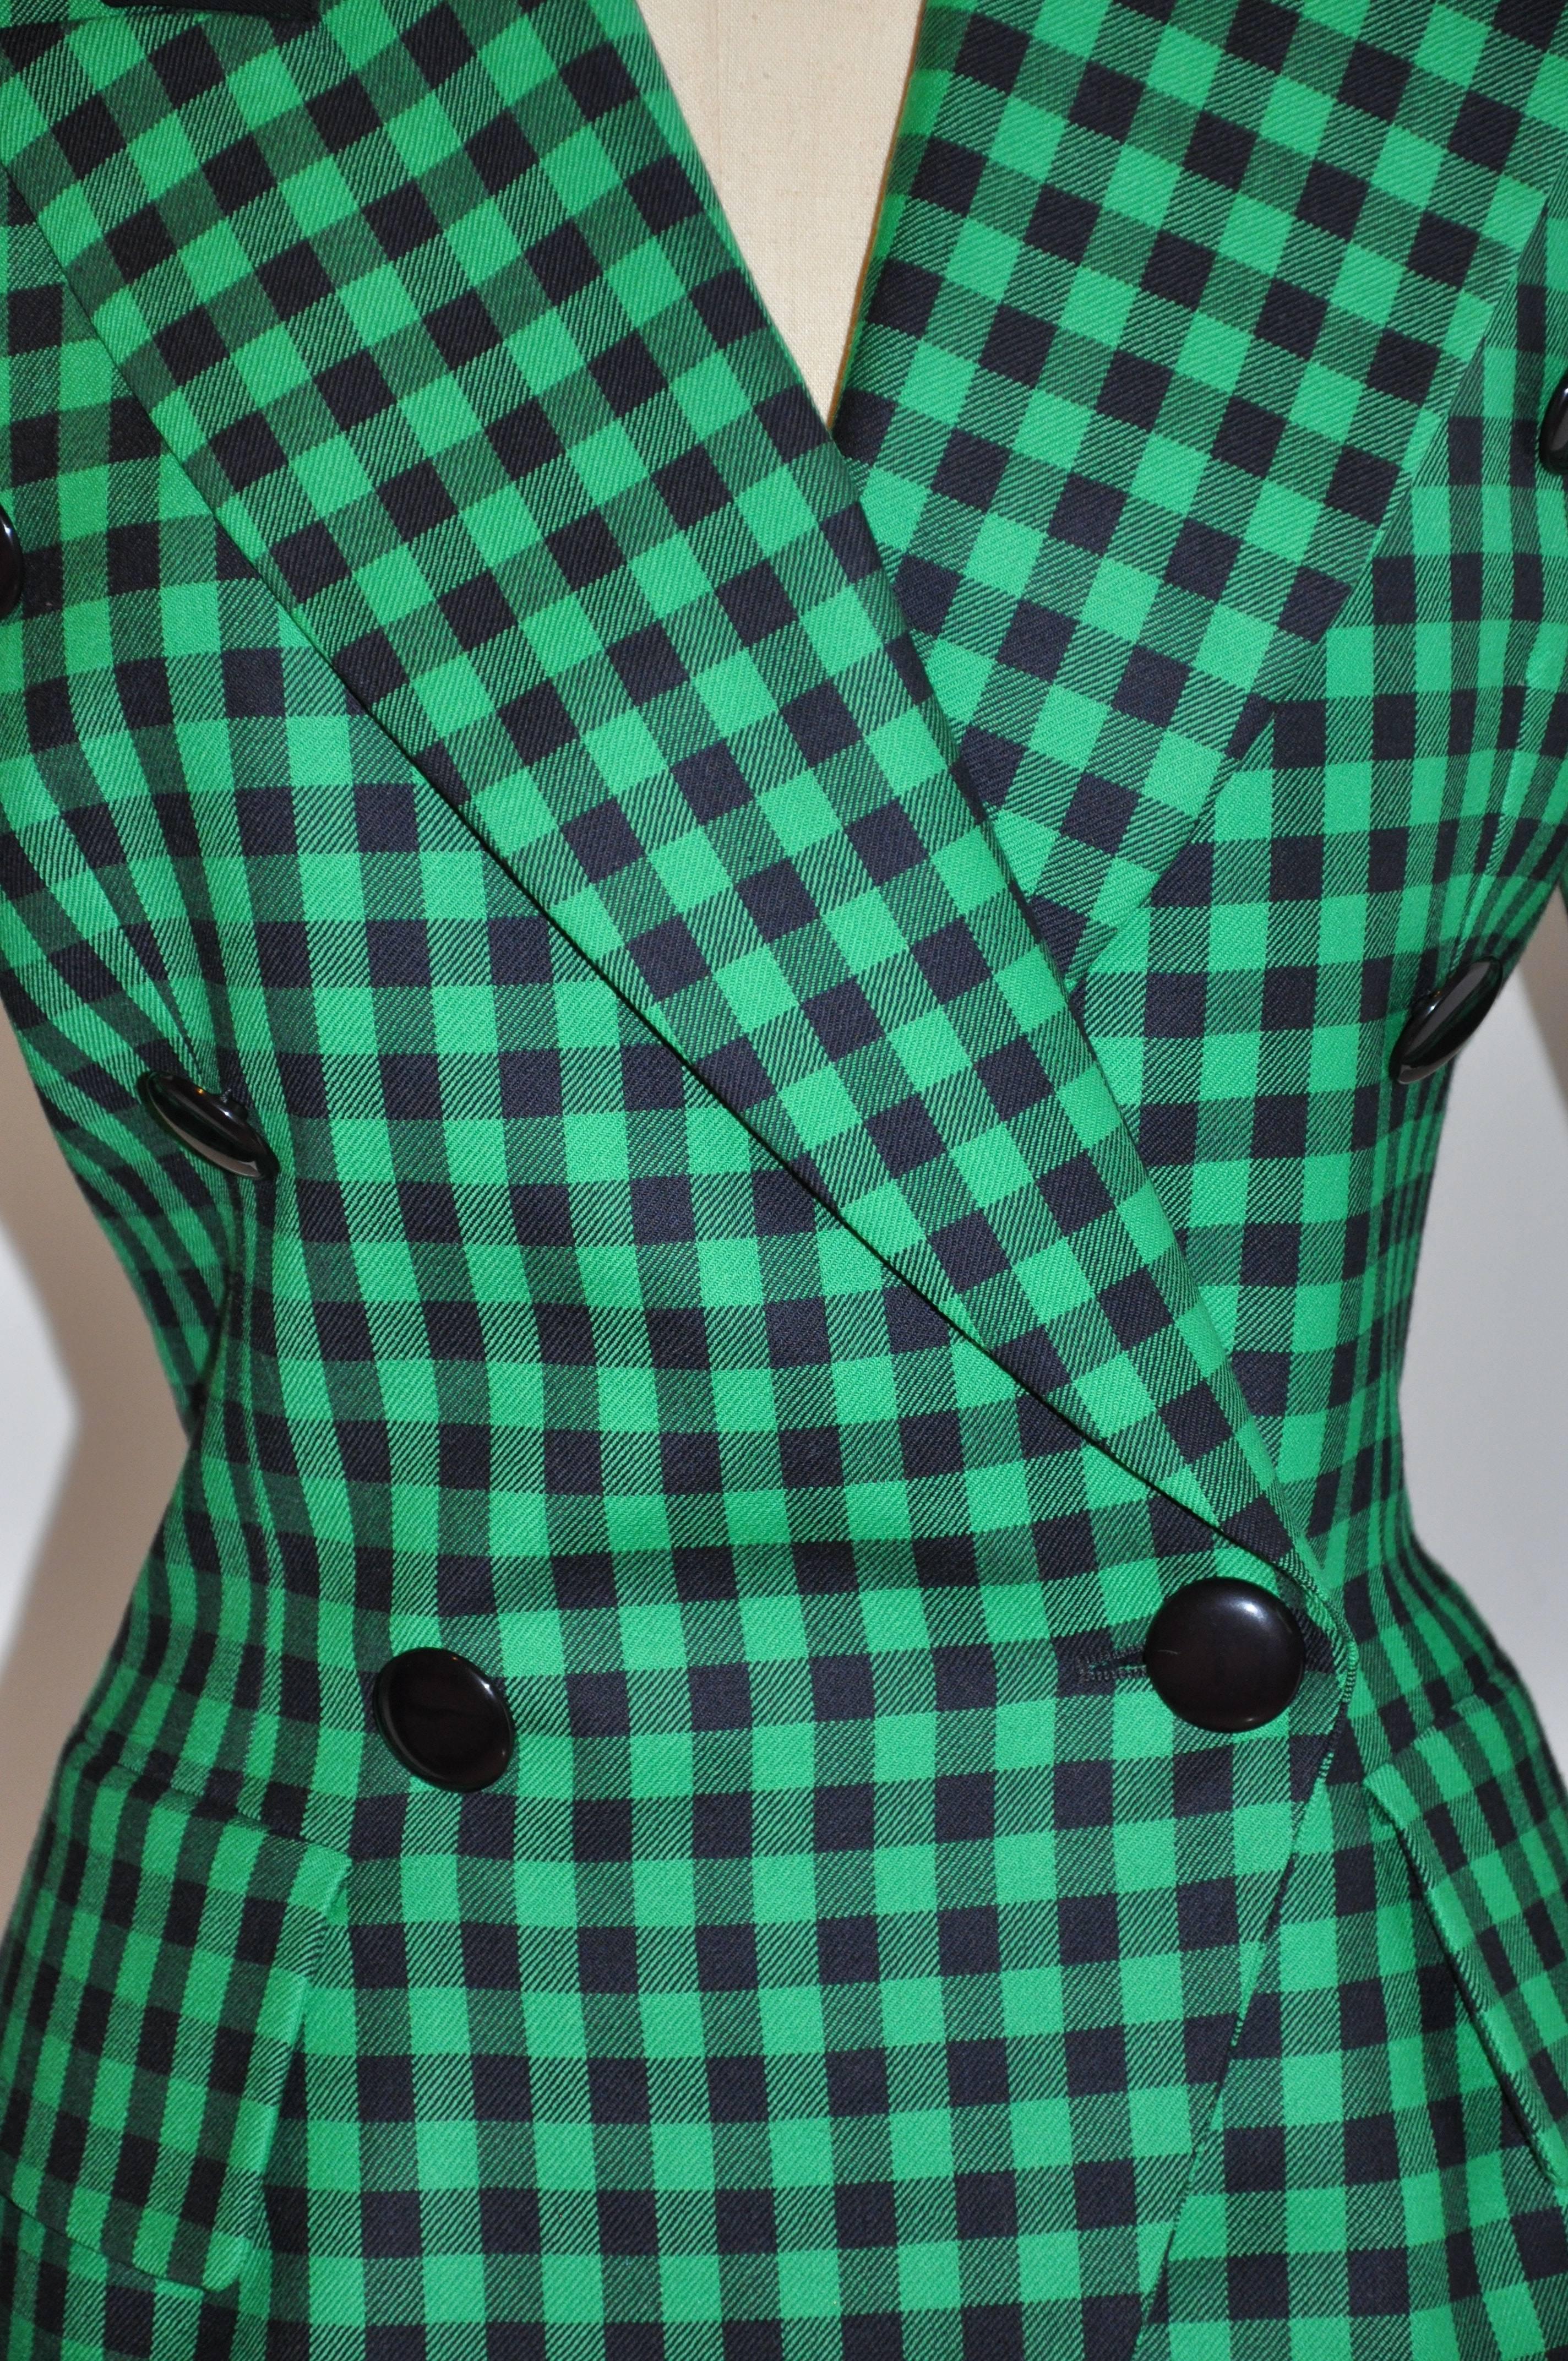 green and black checkered jacket